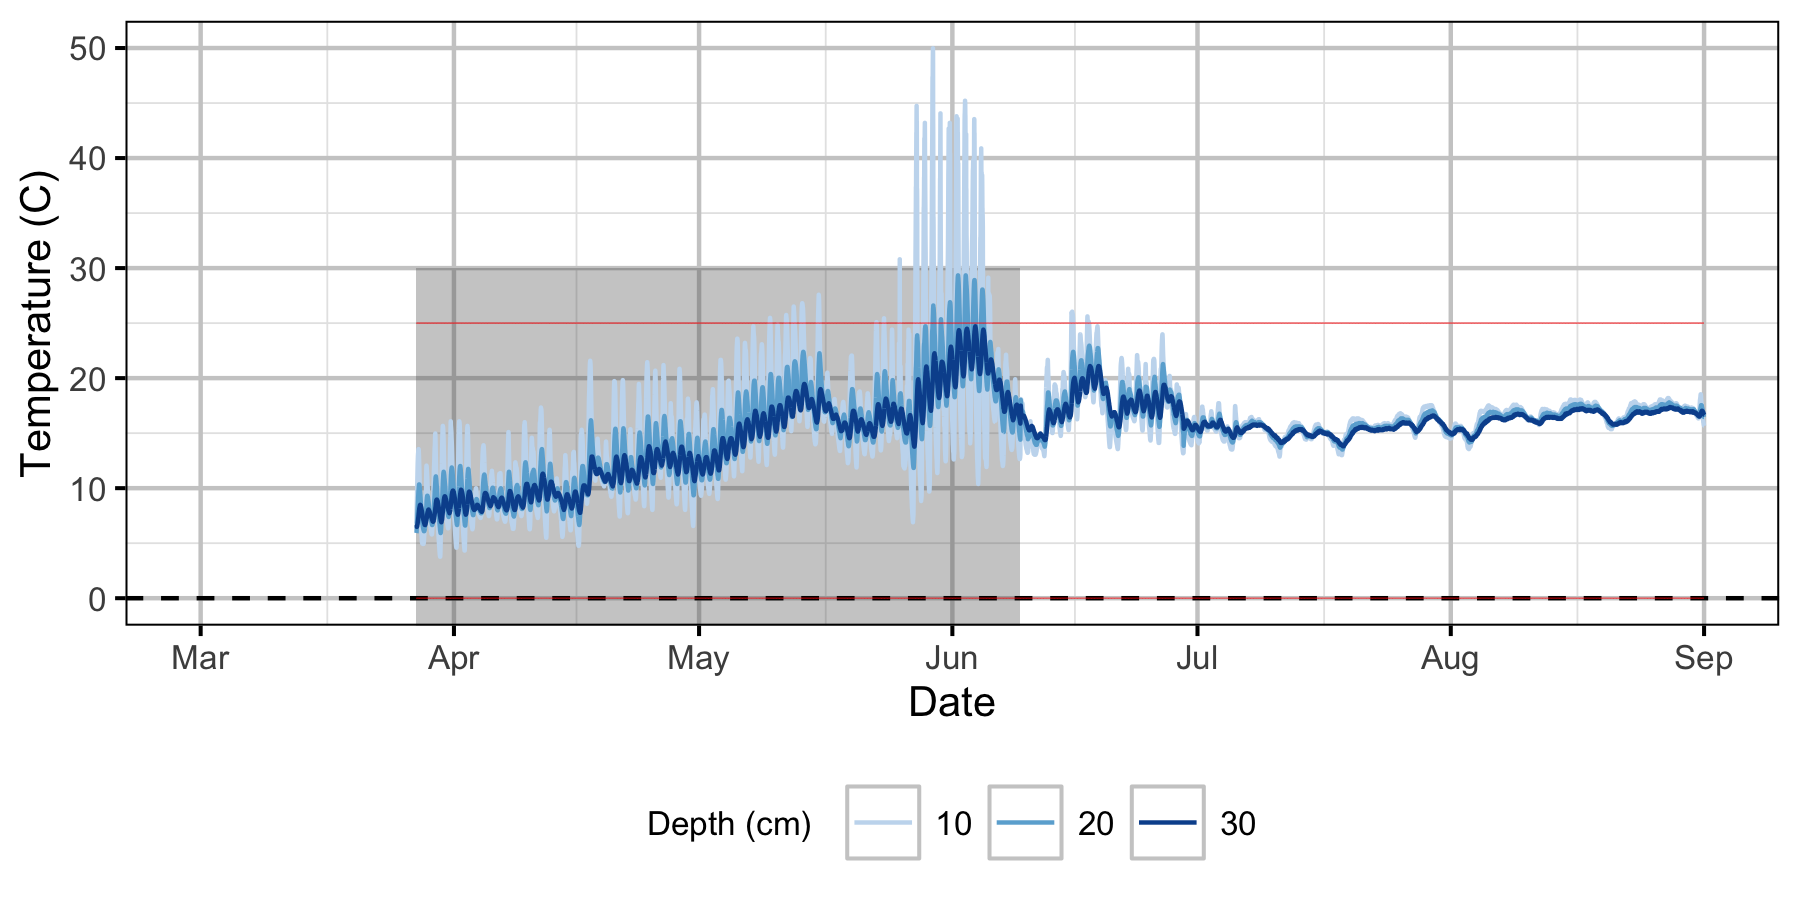 figures/Sensor Data/Absolute Gravel Temperature Stations/Norns Creek Fan/Station11.png